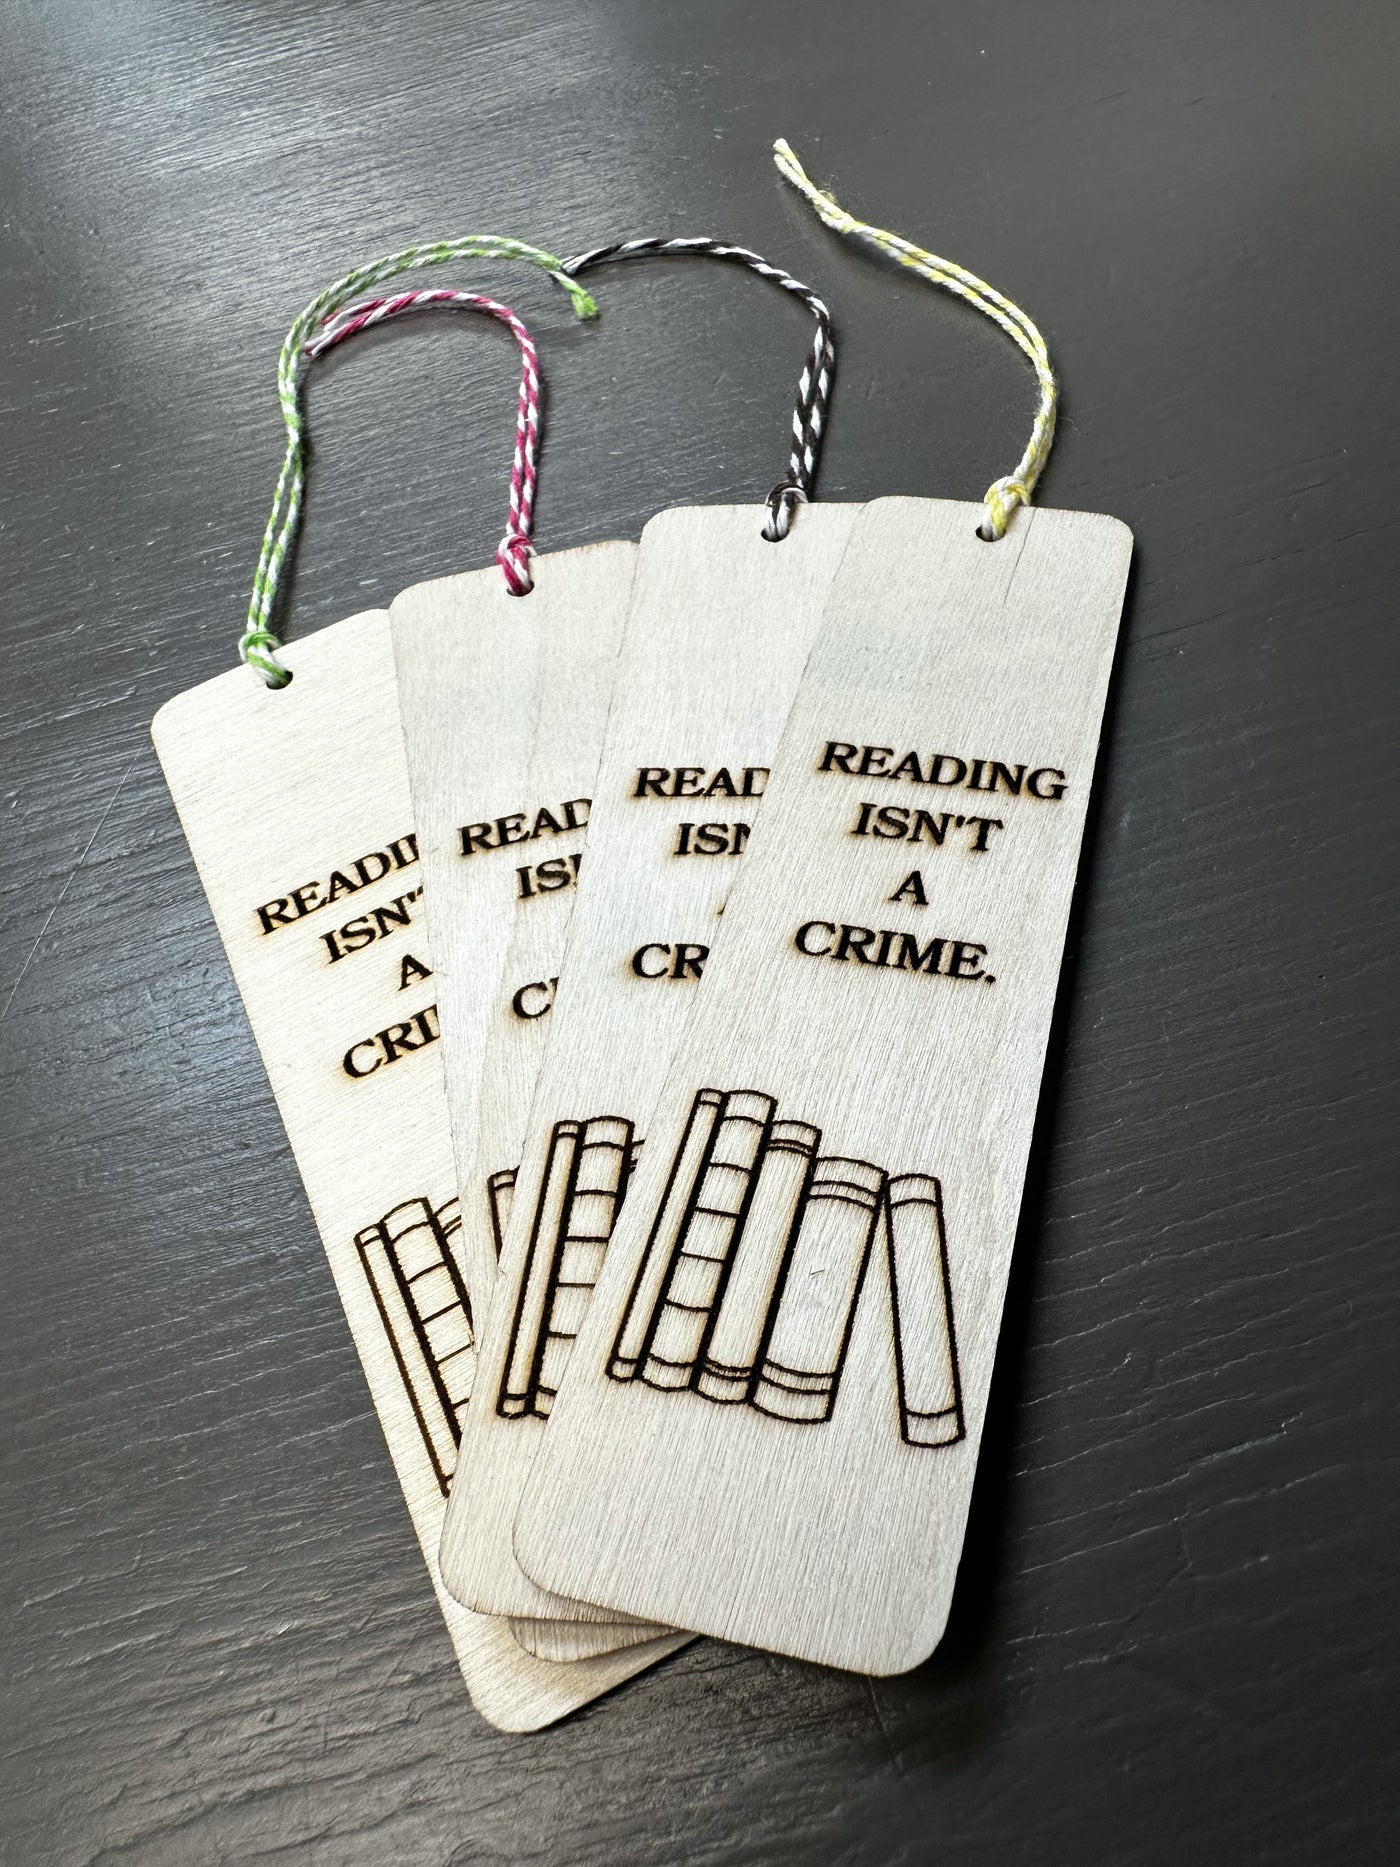 READING ISN’T A CRIME Bookmark